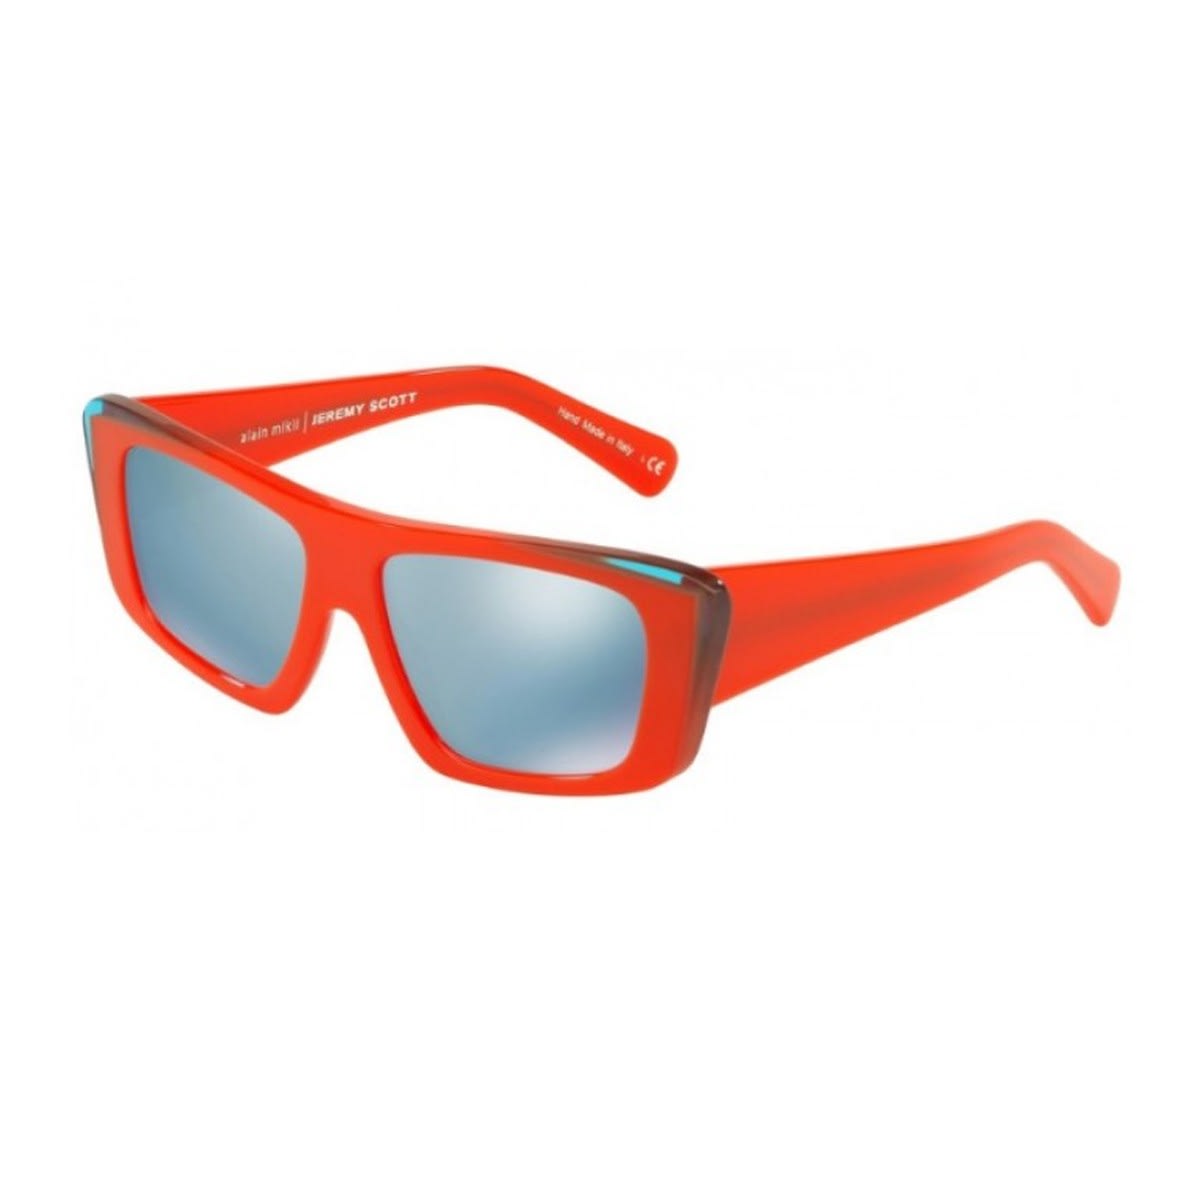 Alain Mikli A05029 Special Edition Sunglasses